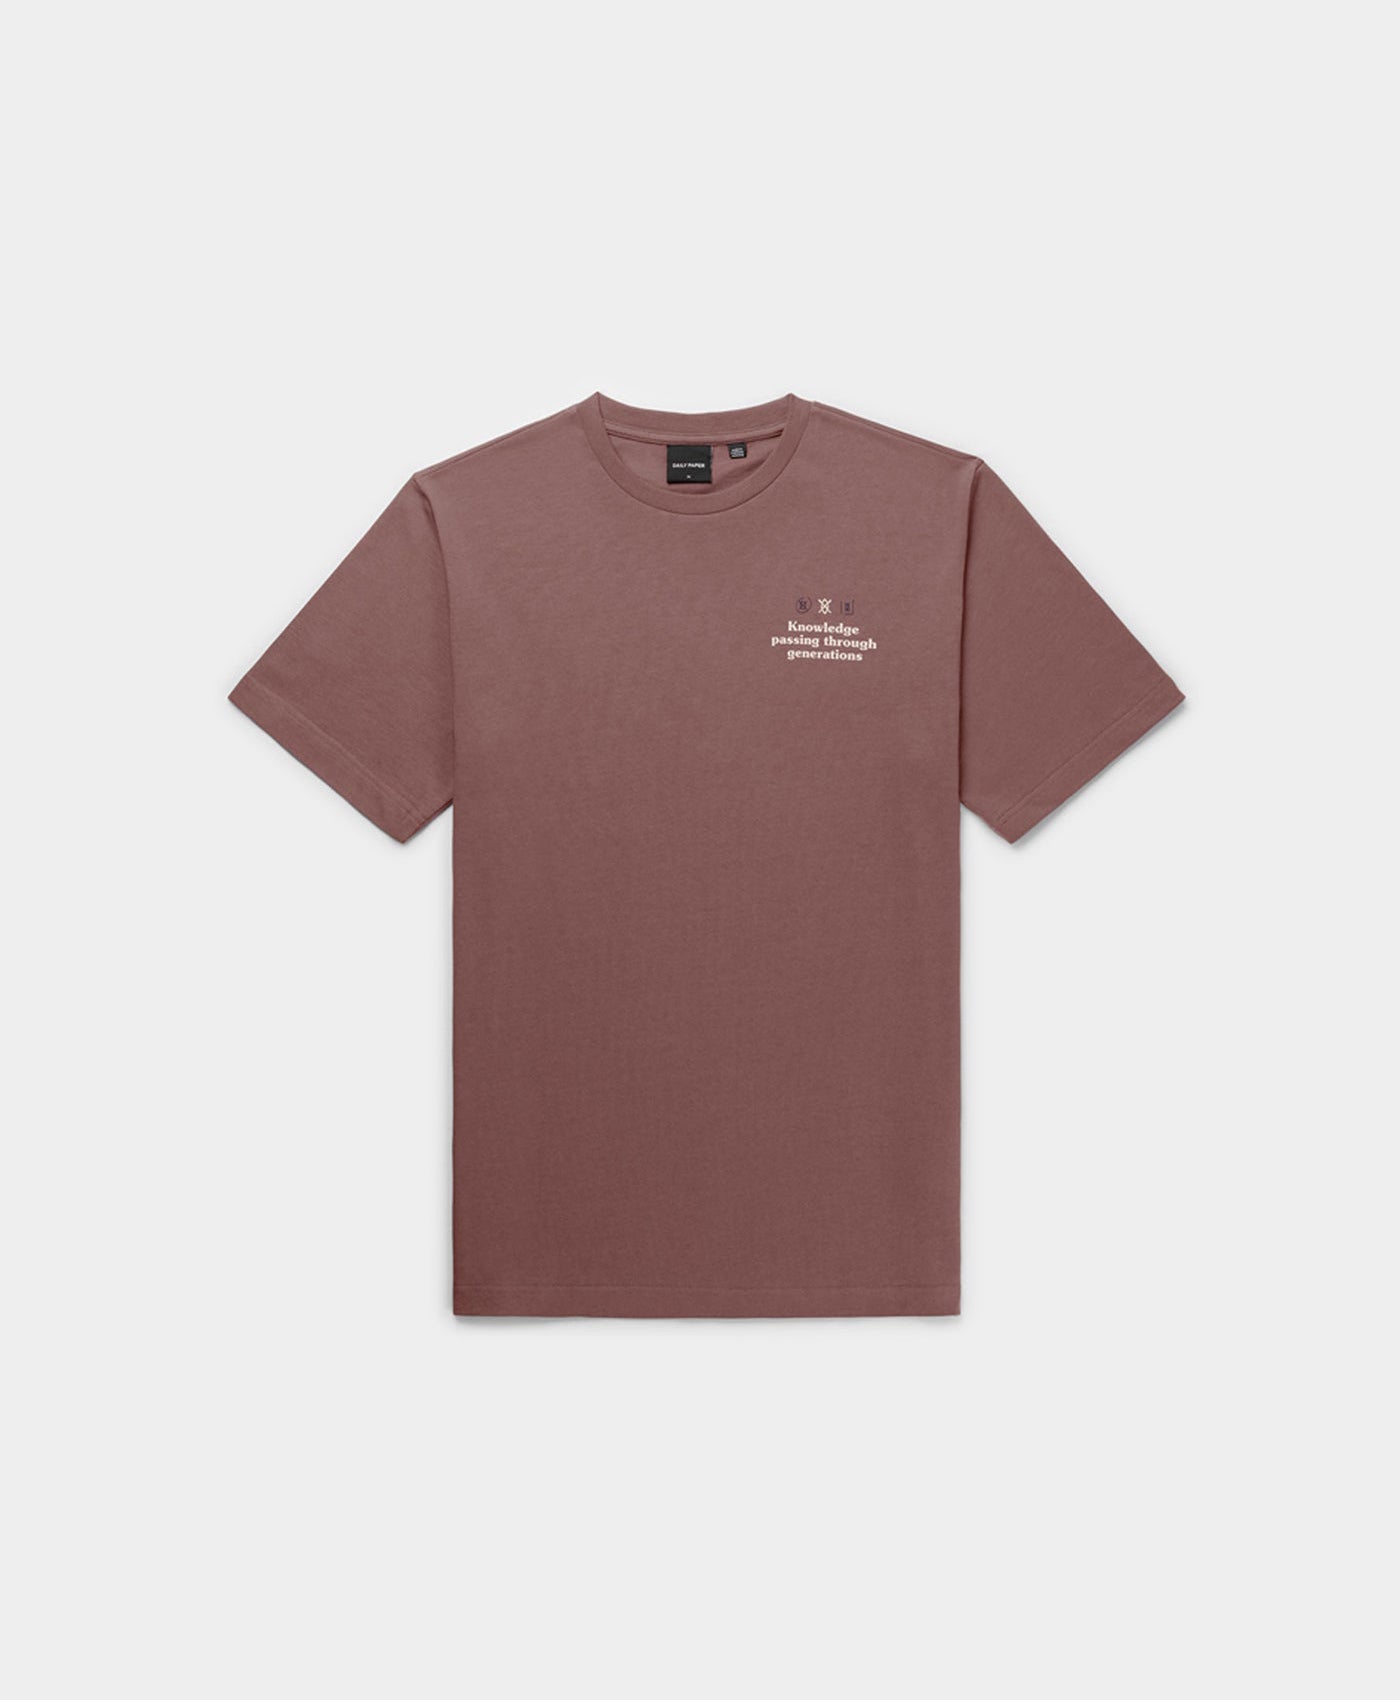 DP - Rose Brown Numair T-Shirt - Packshot - Rear